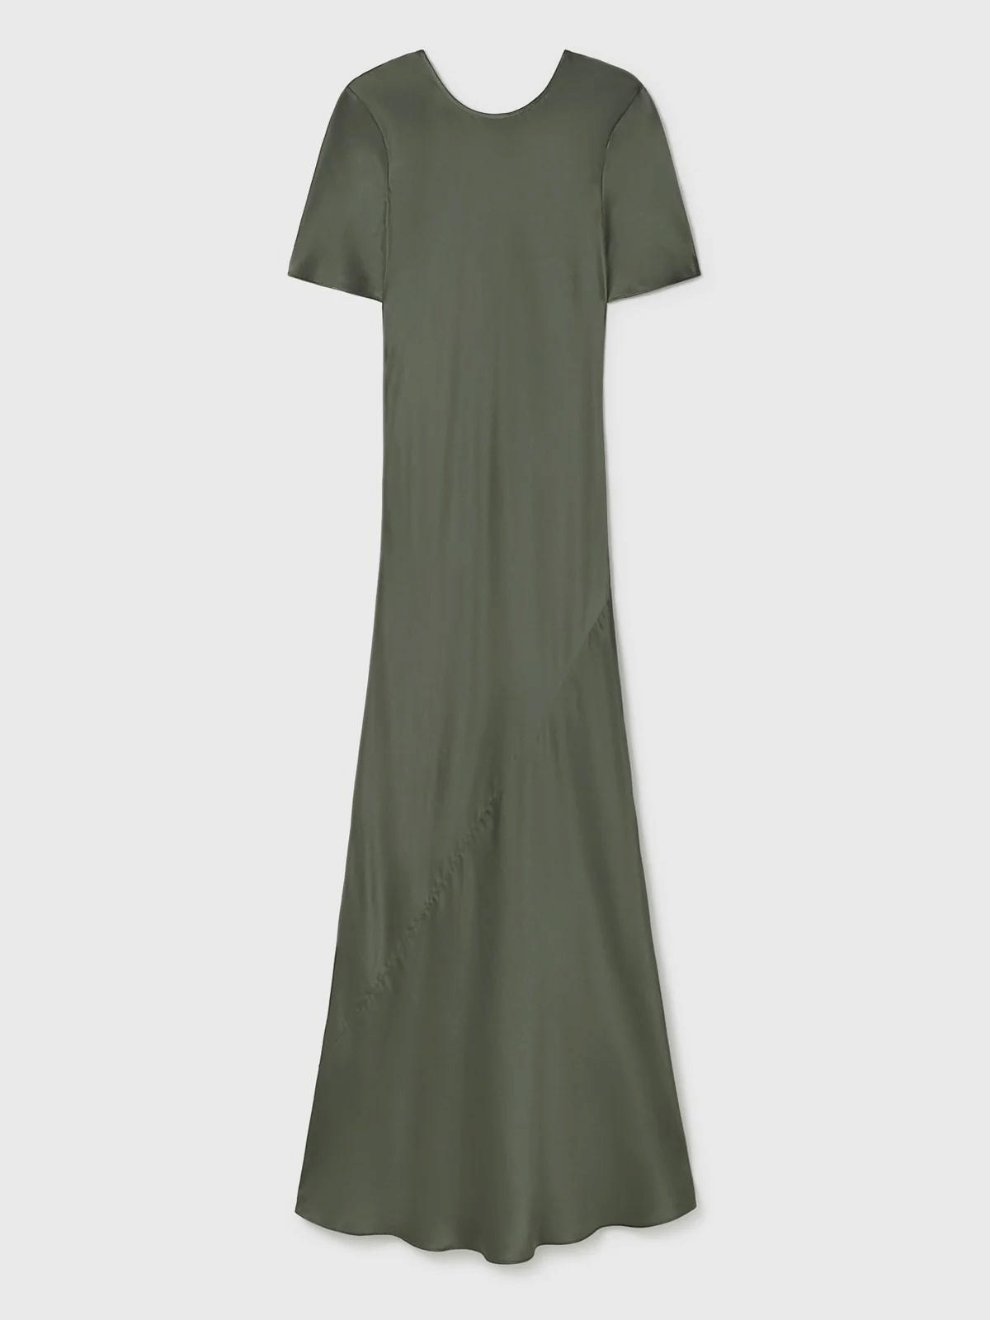 Short Sleeve Bias Dress in Thyme